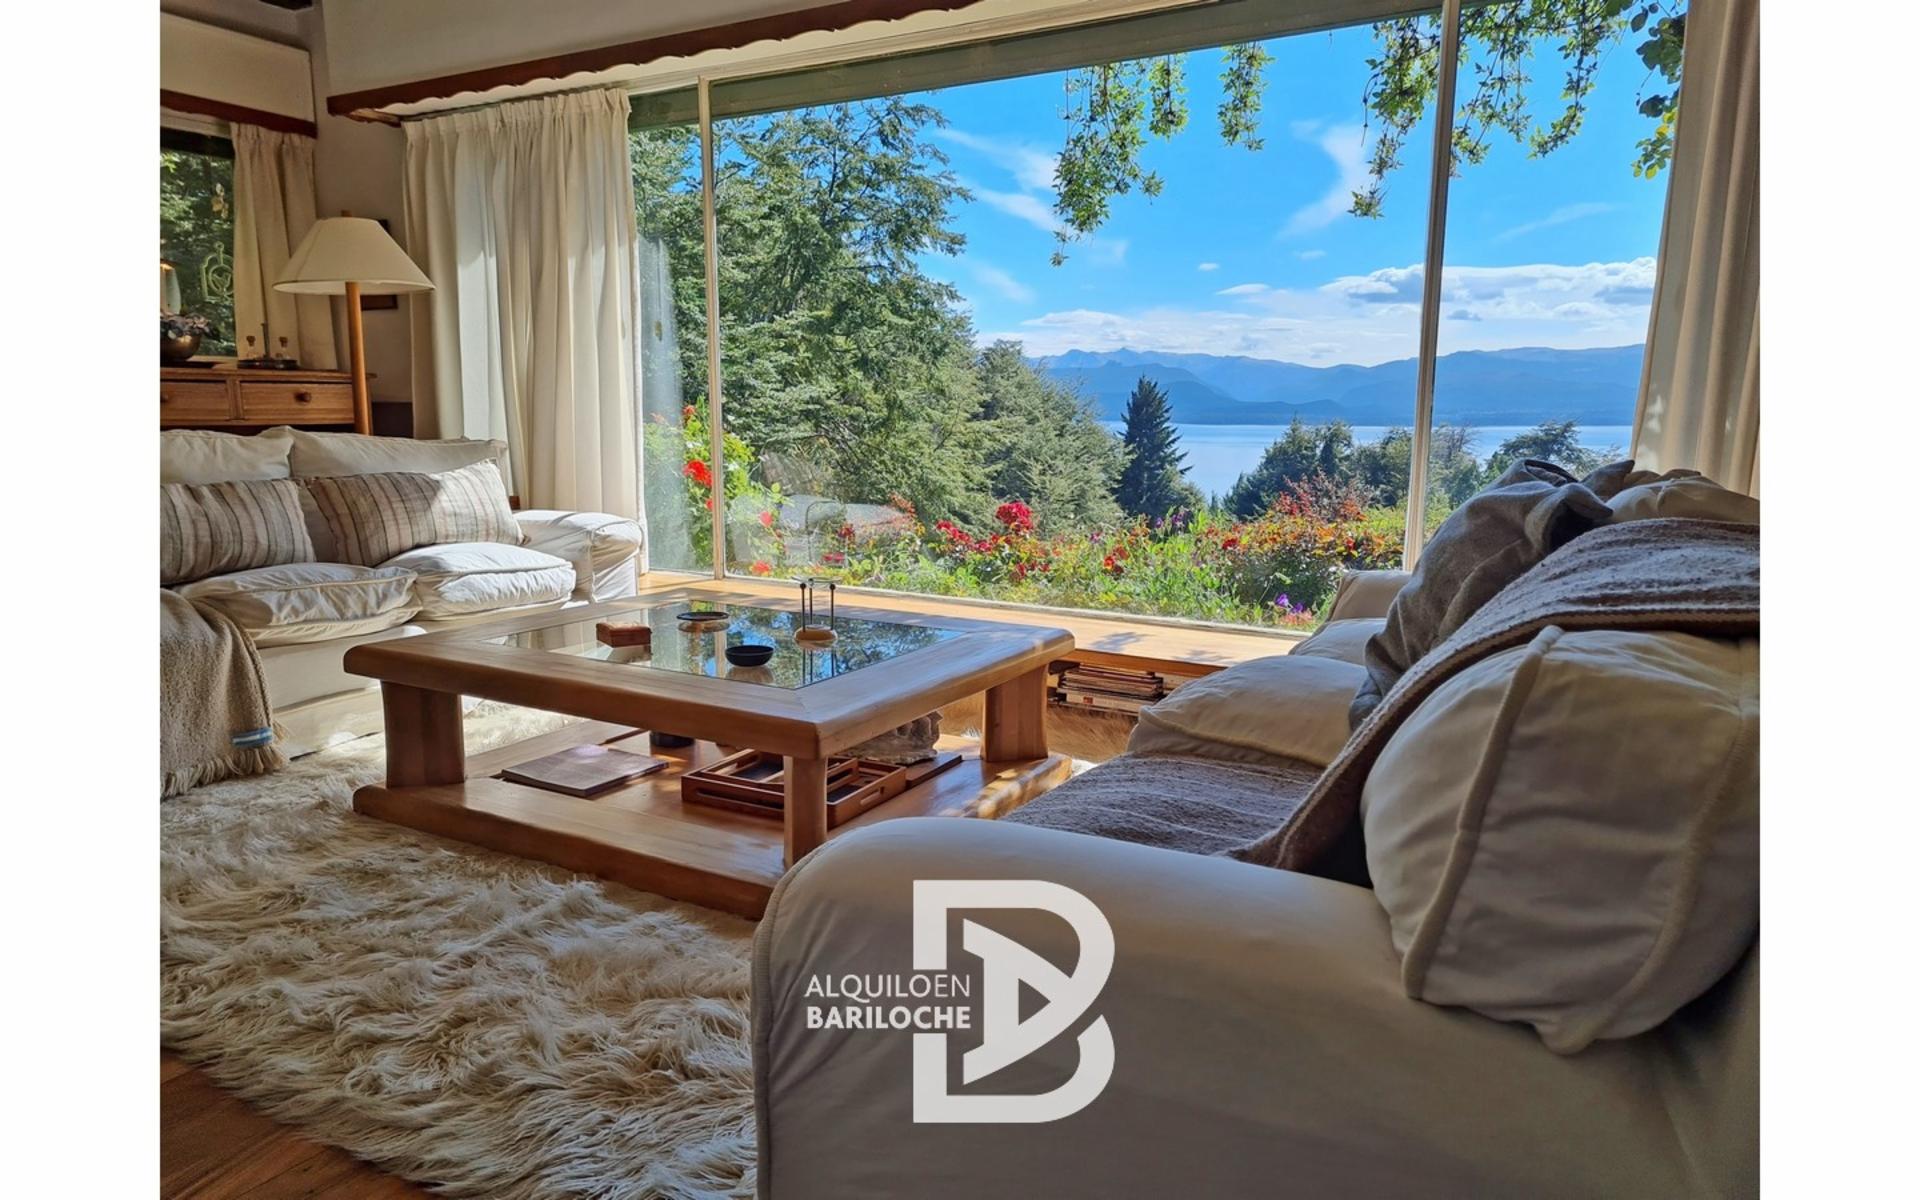 Alquiler Casa en Bariloche para 4 con Espectacular Vista Al Lago